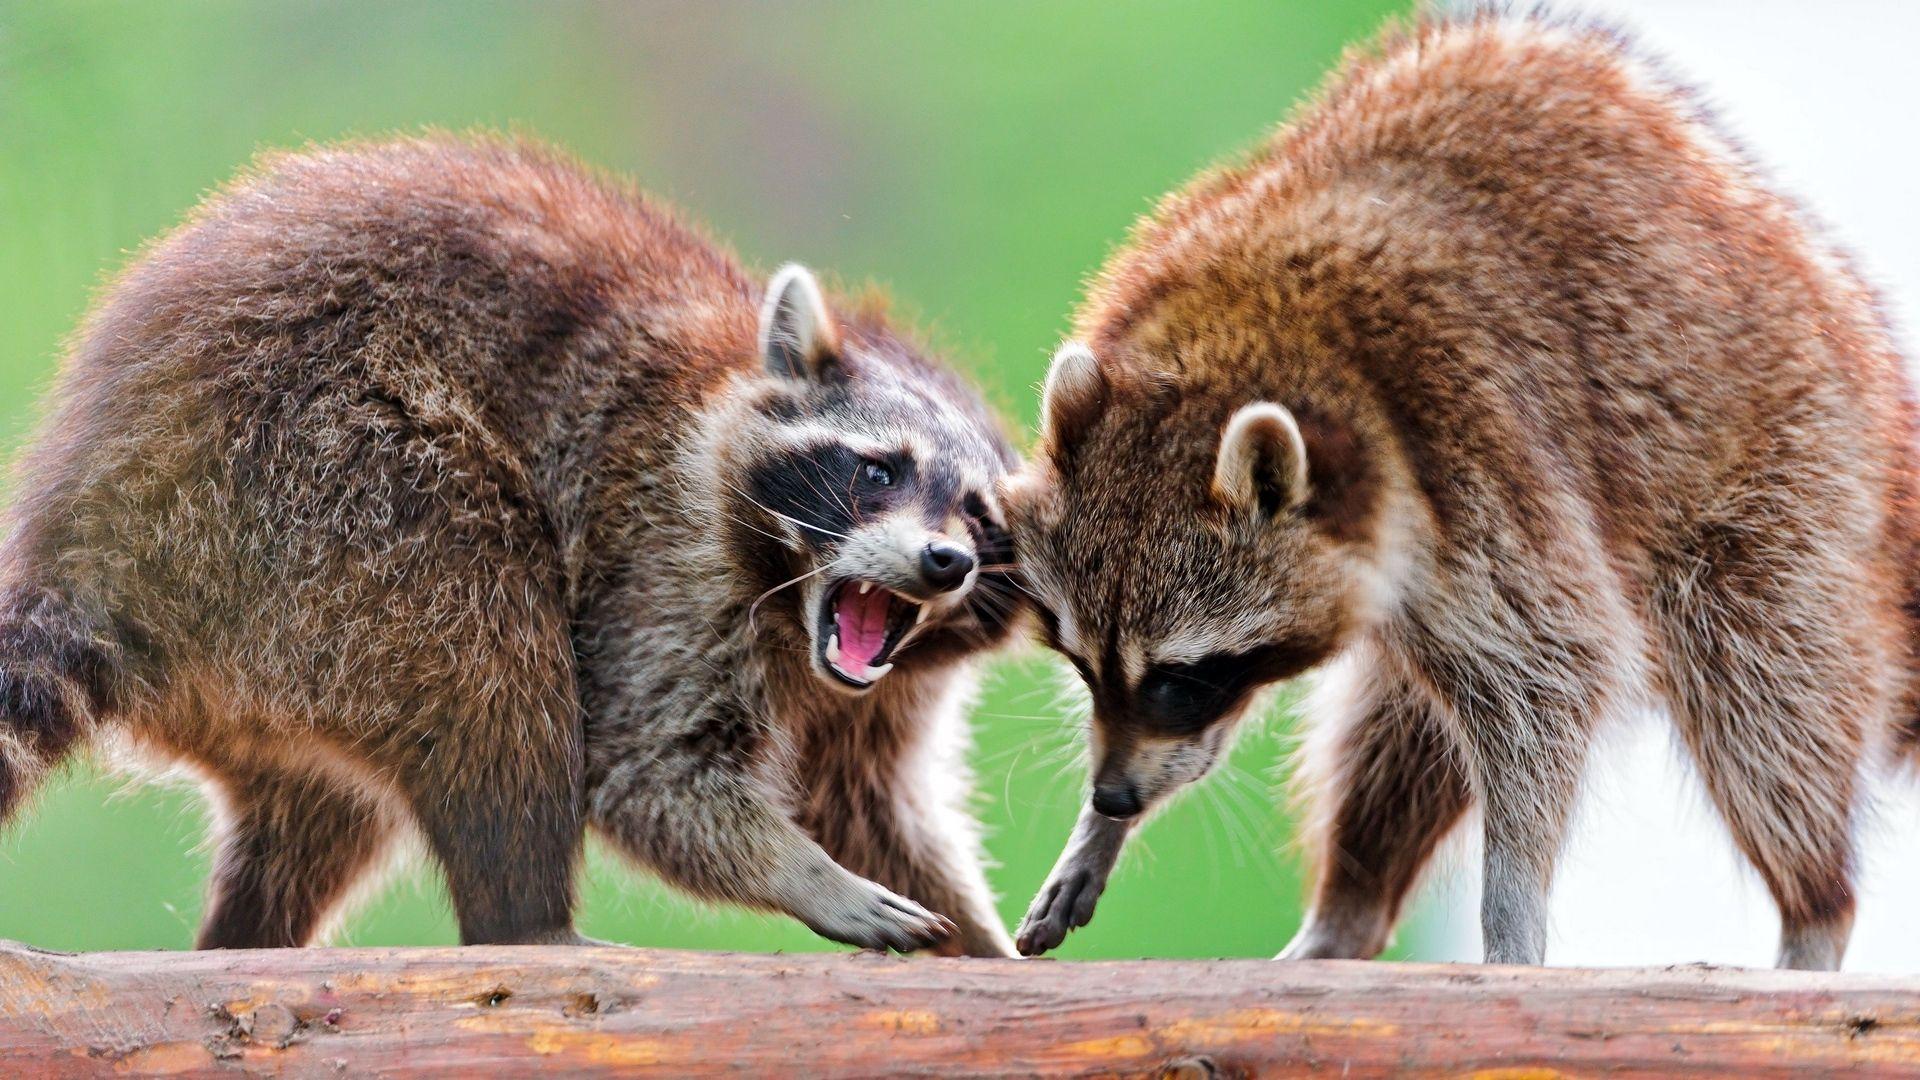 Download wallpaper 1920x1080 raccoons, raccoon, couple, fight full